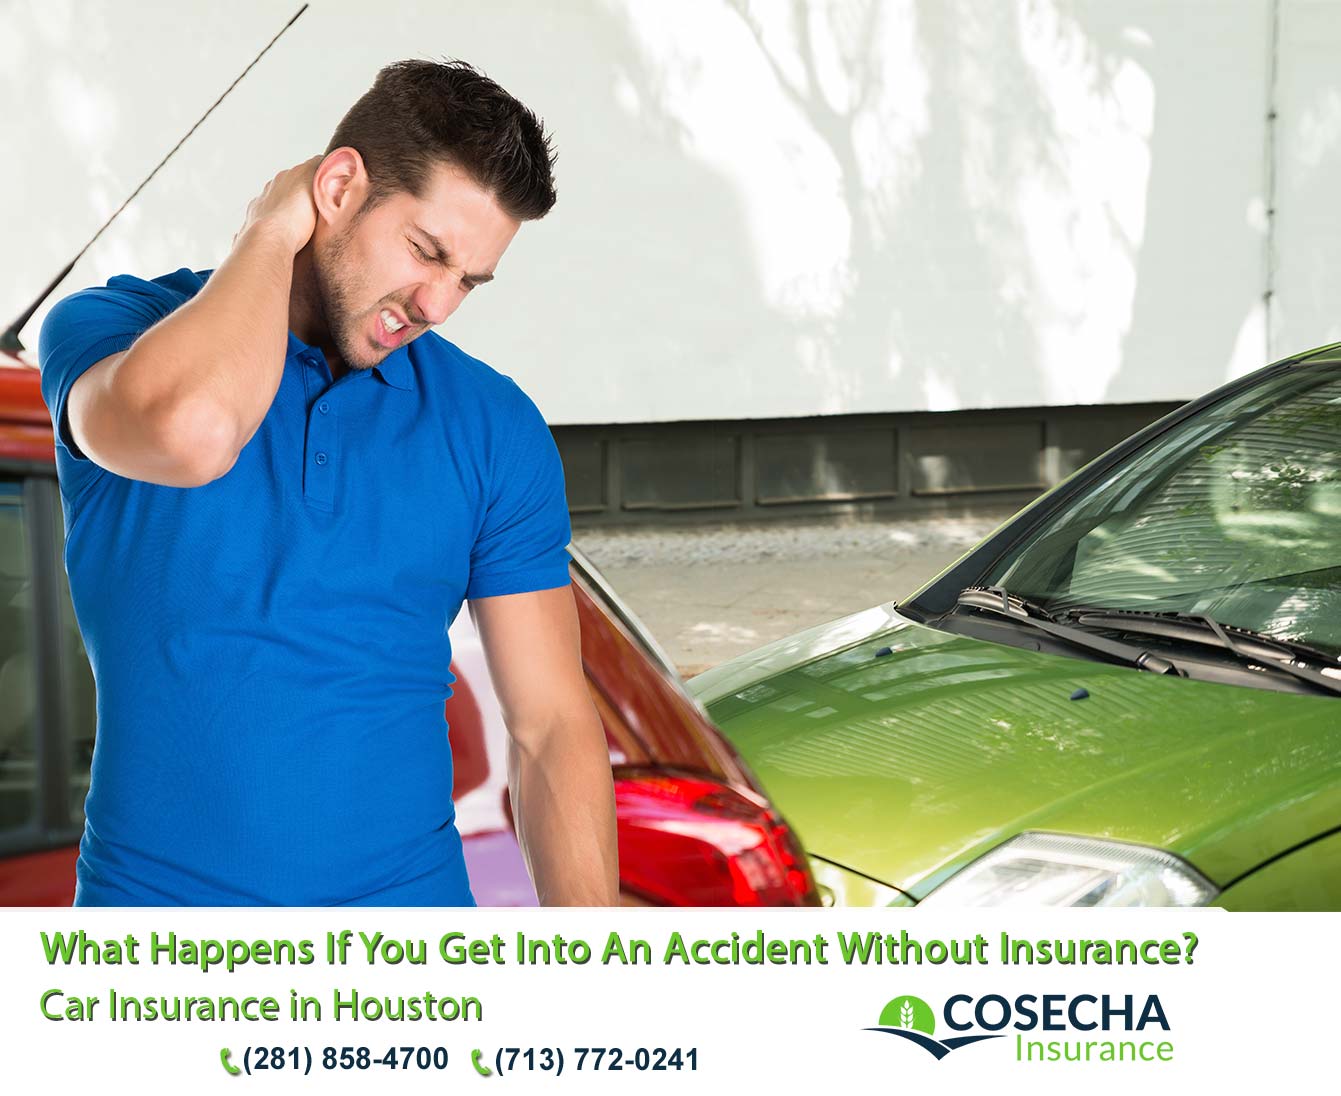 05 Car Insurance in Houston